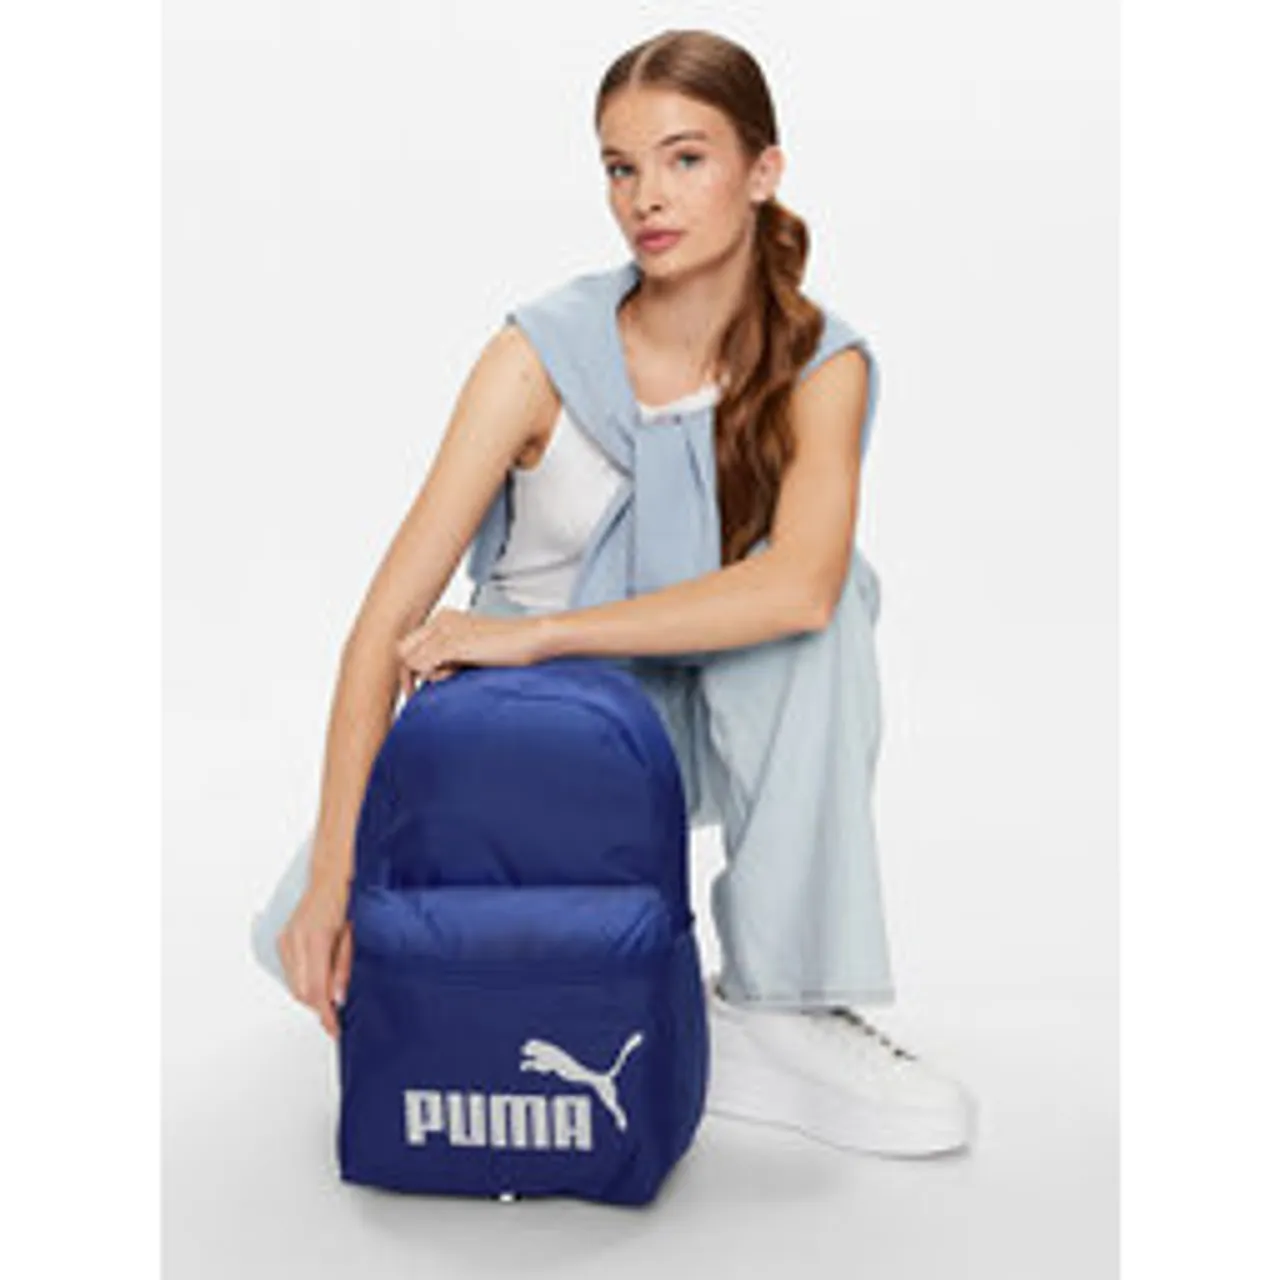 Rucksack Puma Phase Backpack 075487 27 Royal Sapphire